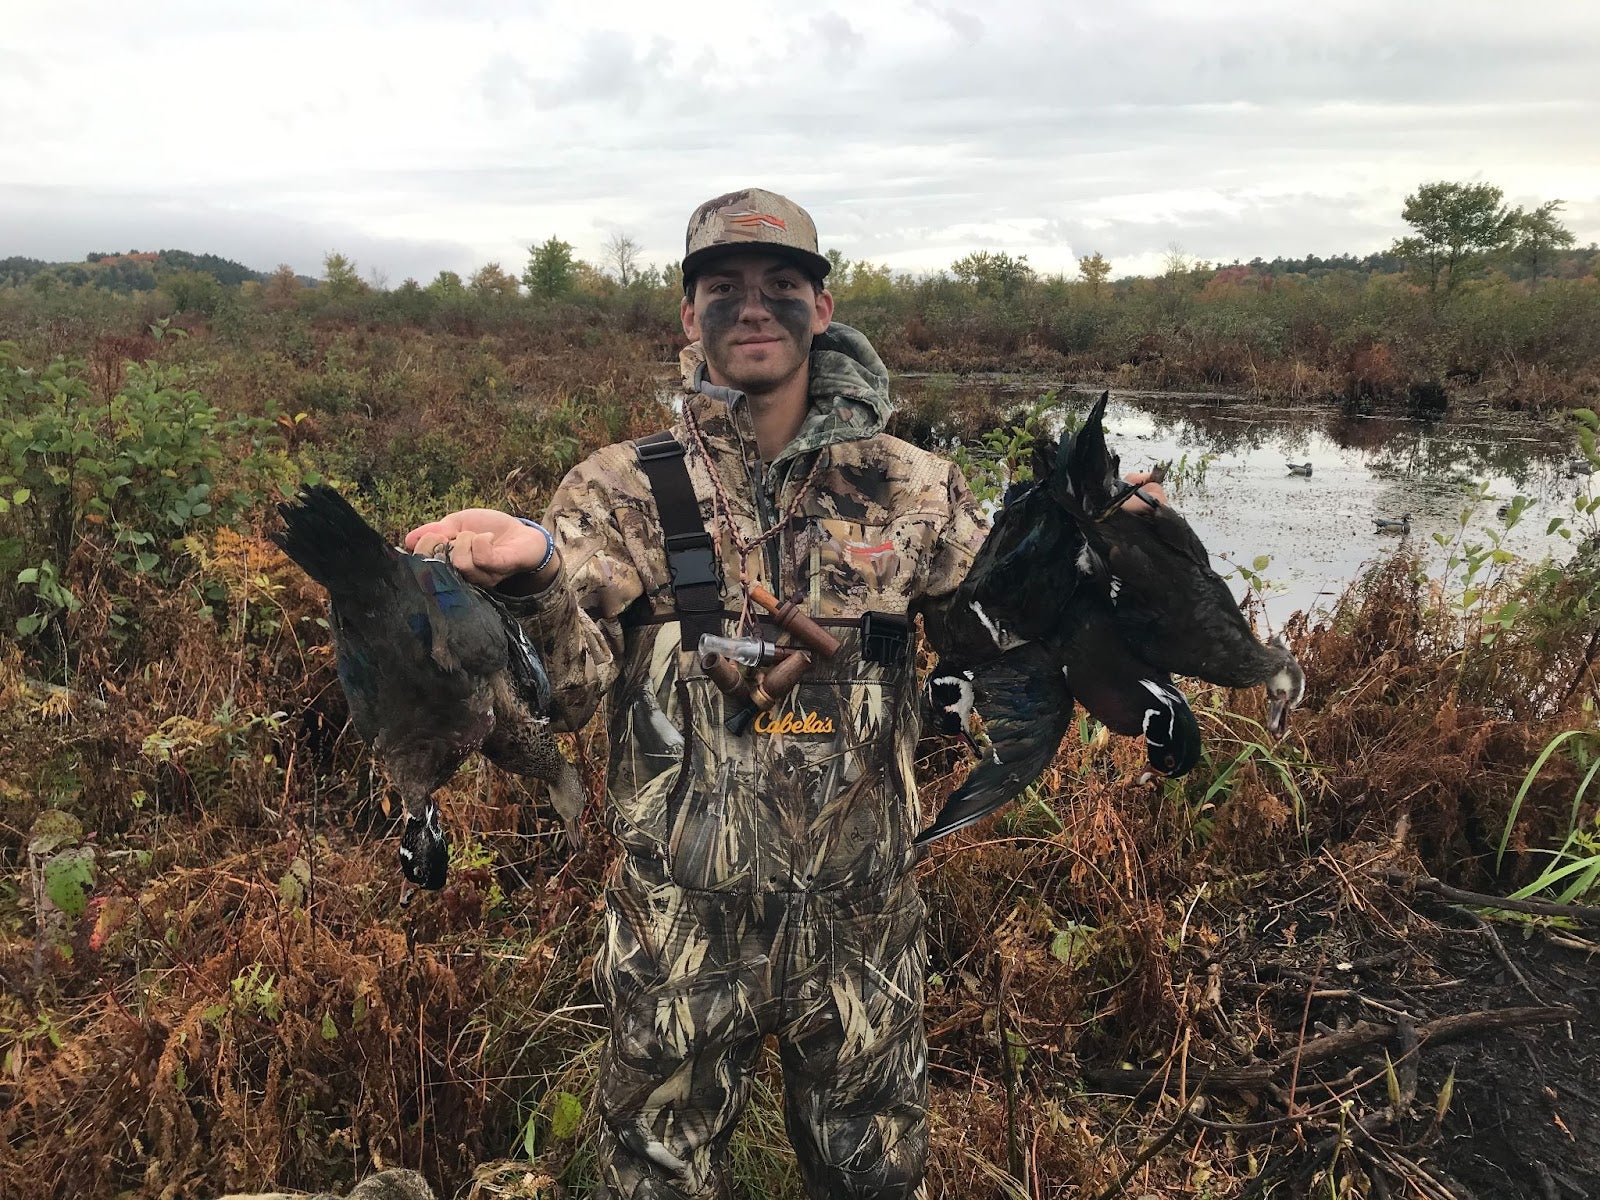 Best Duck Hunting Waders of 2022